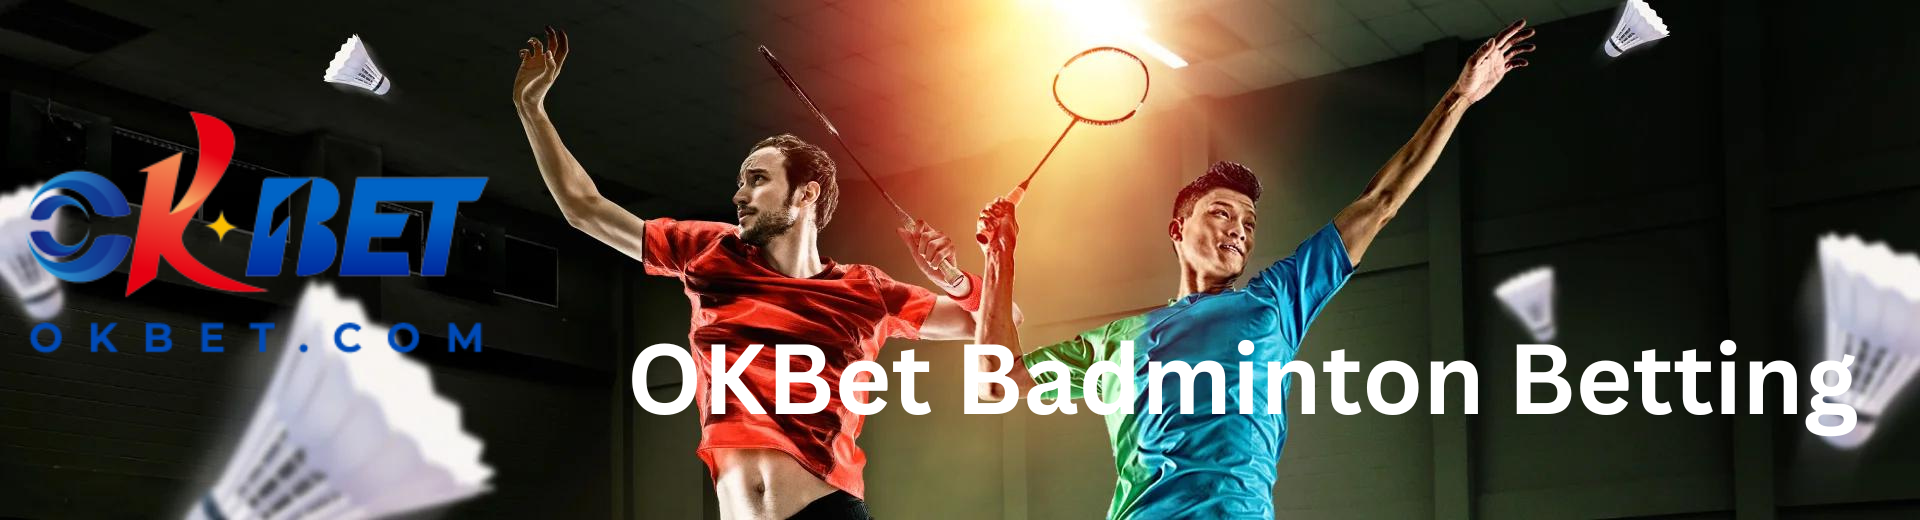 OKBET Badminton Betting